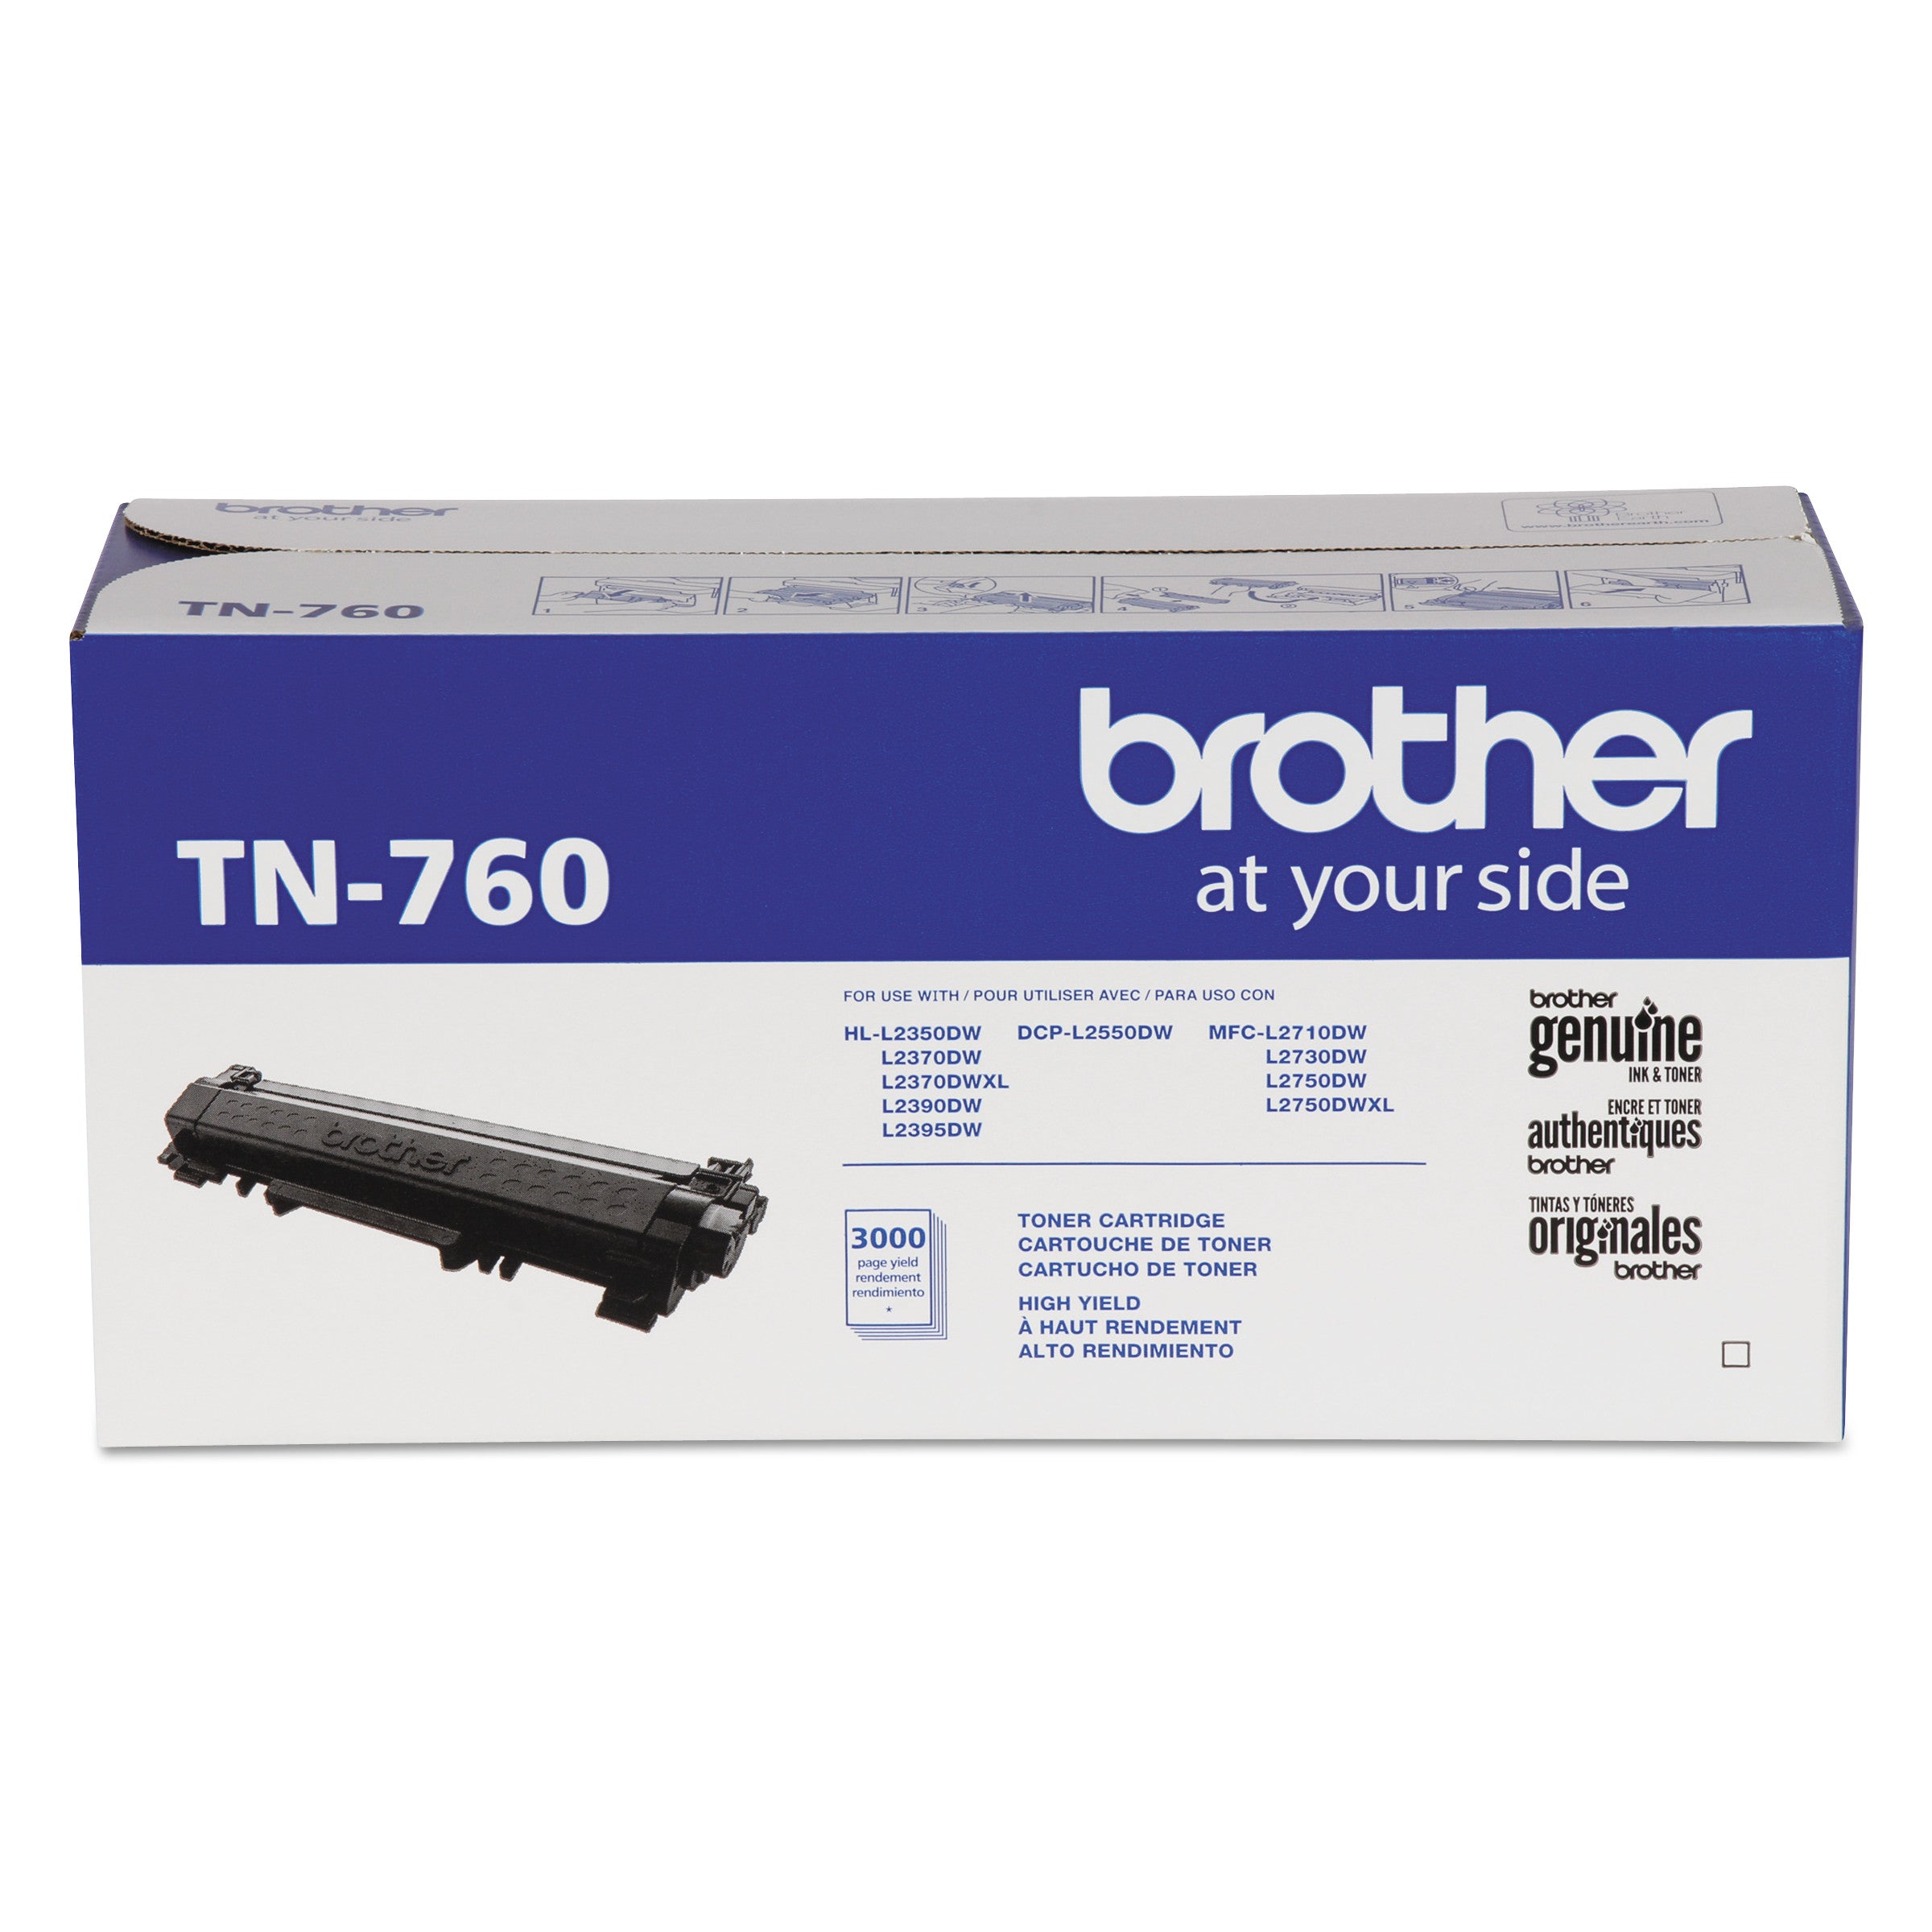 Absolute Toner Brother Genuine OEM TN760 Black High Yield Toner Cartridge Original Brother Cartridges